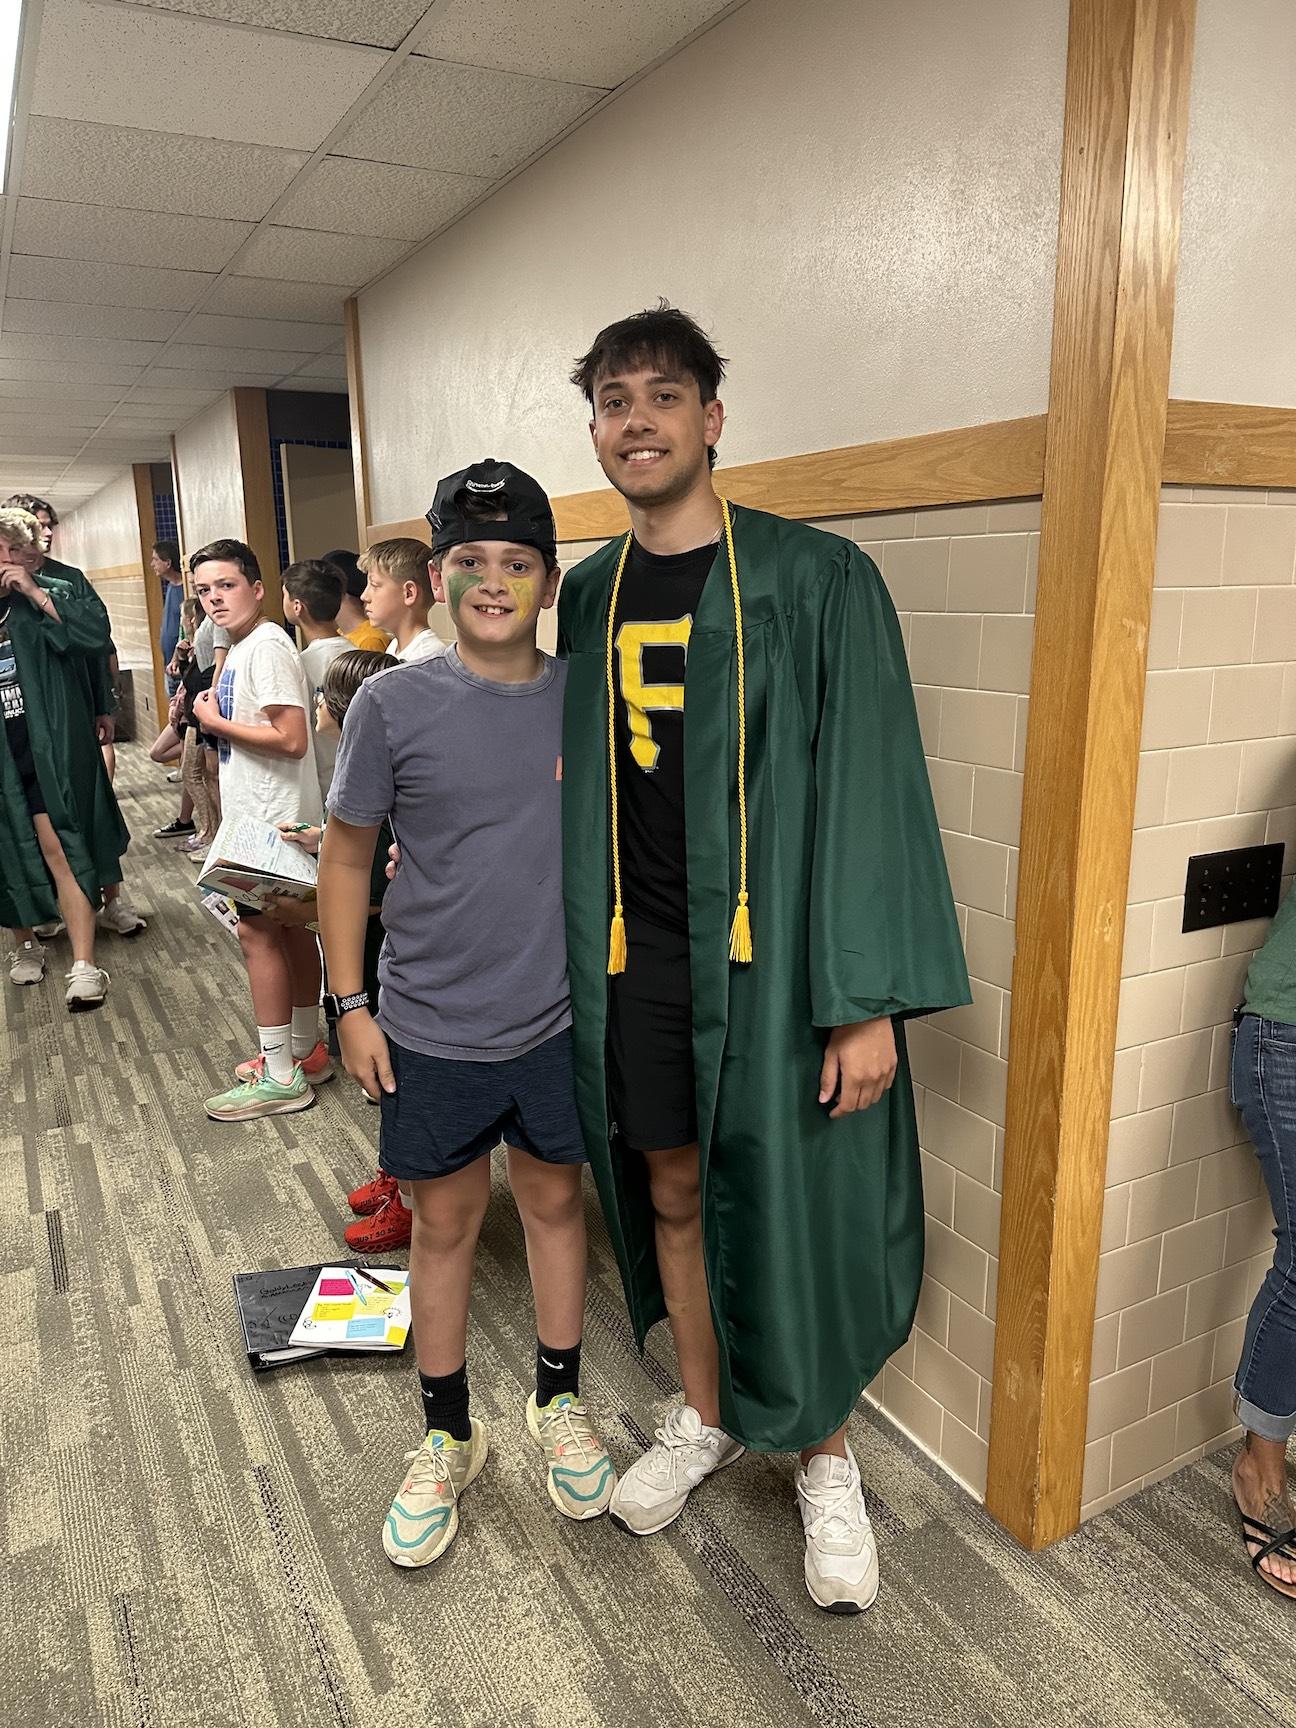 Fifth-grader Nate Goldberg poses with his brother, Josh, at Level Green’s graduation parade